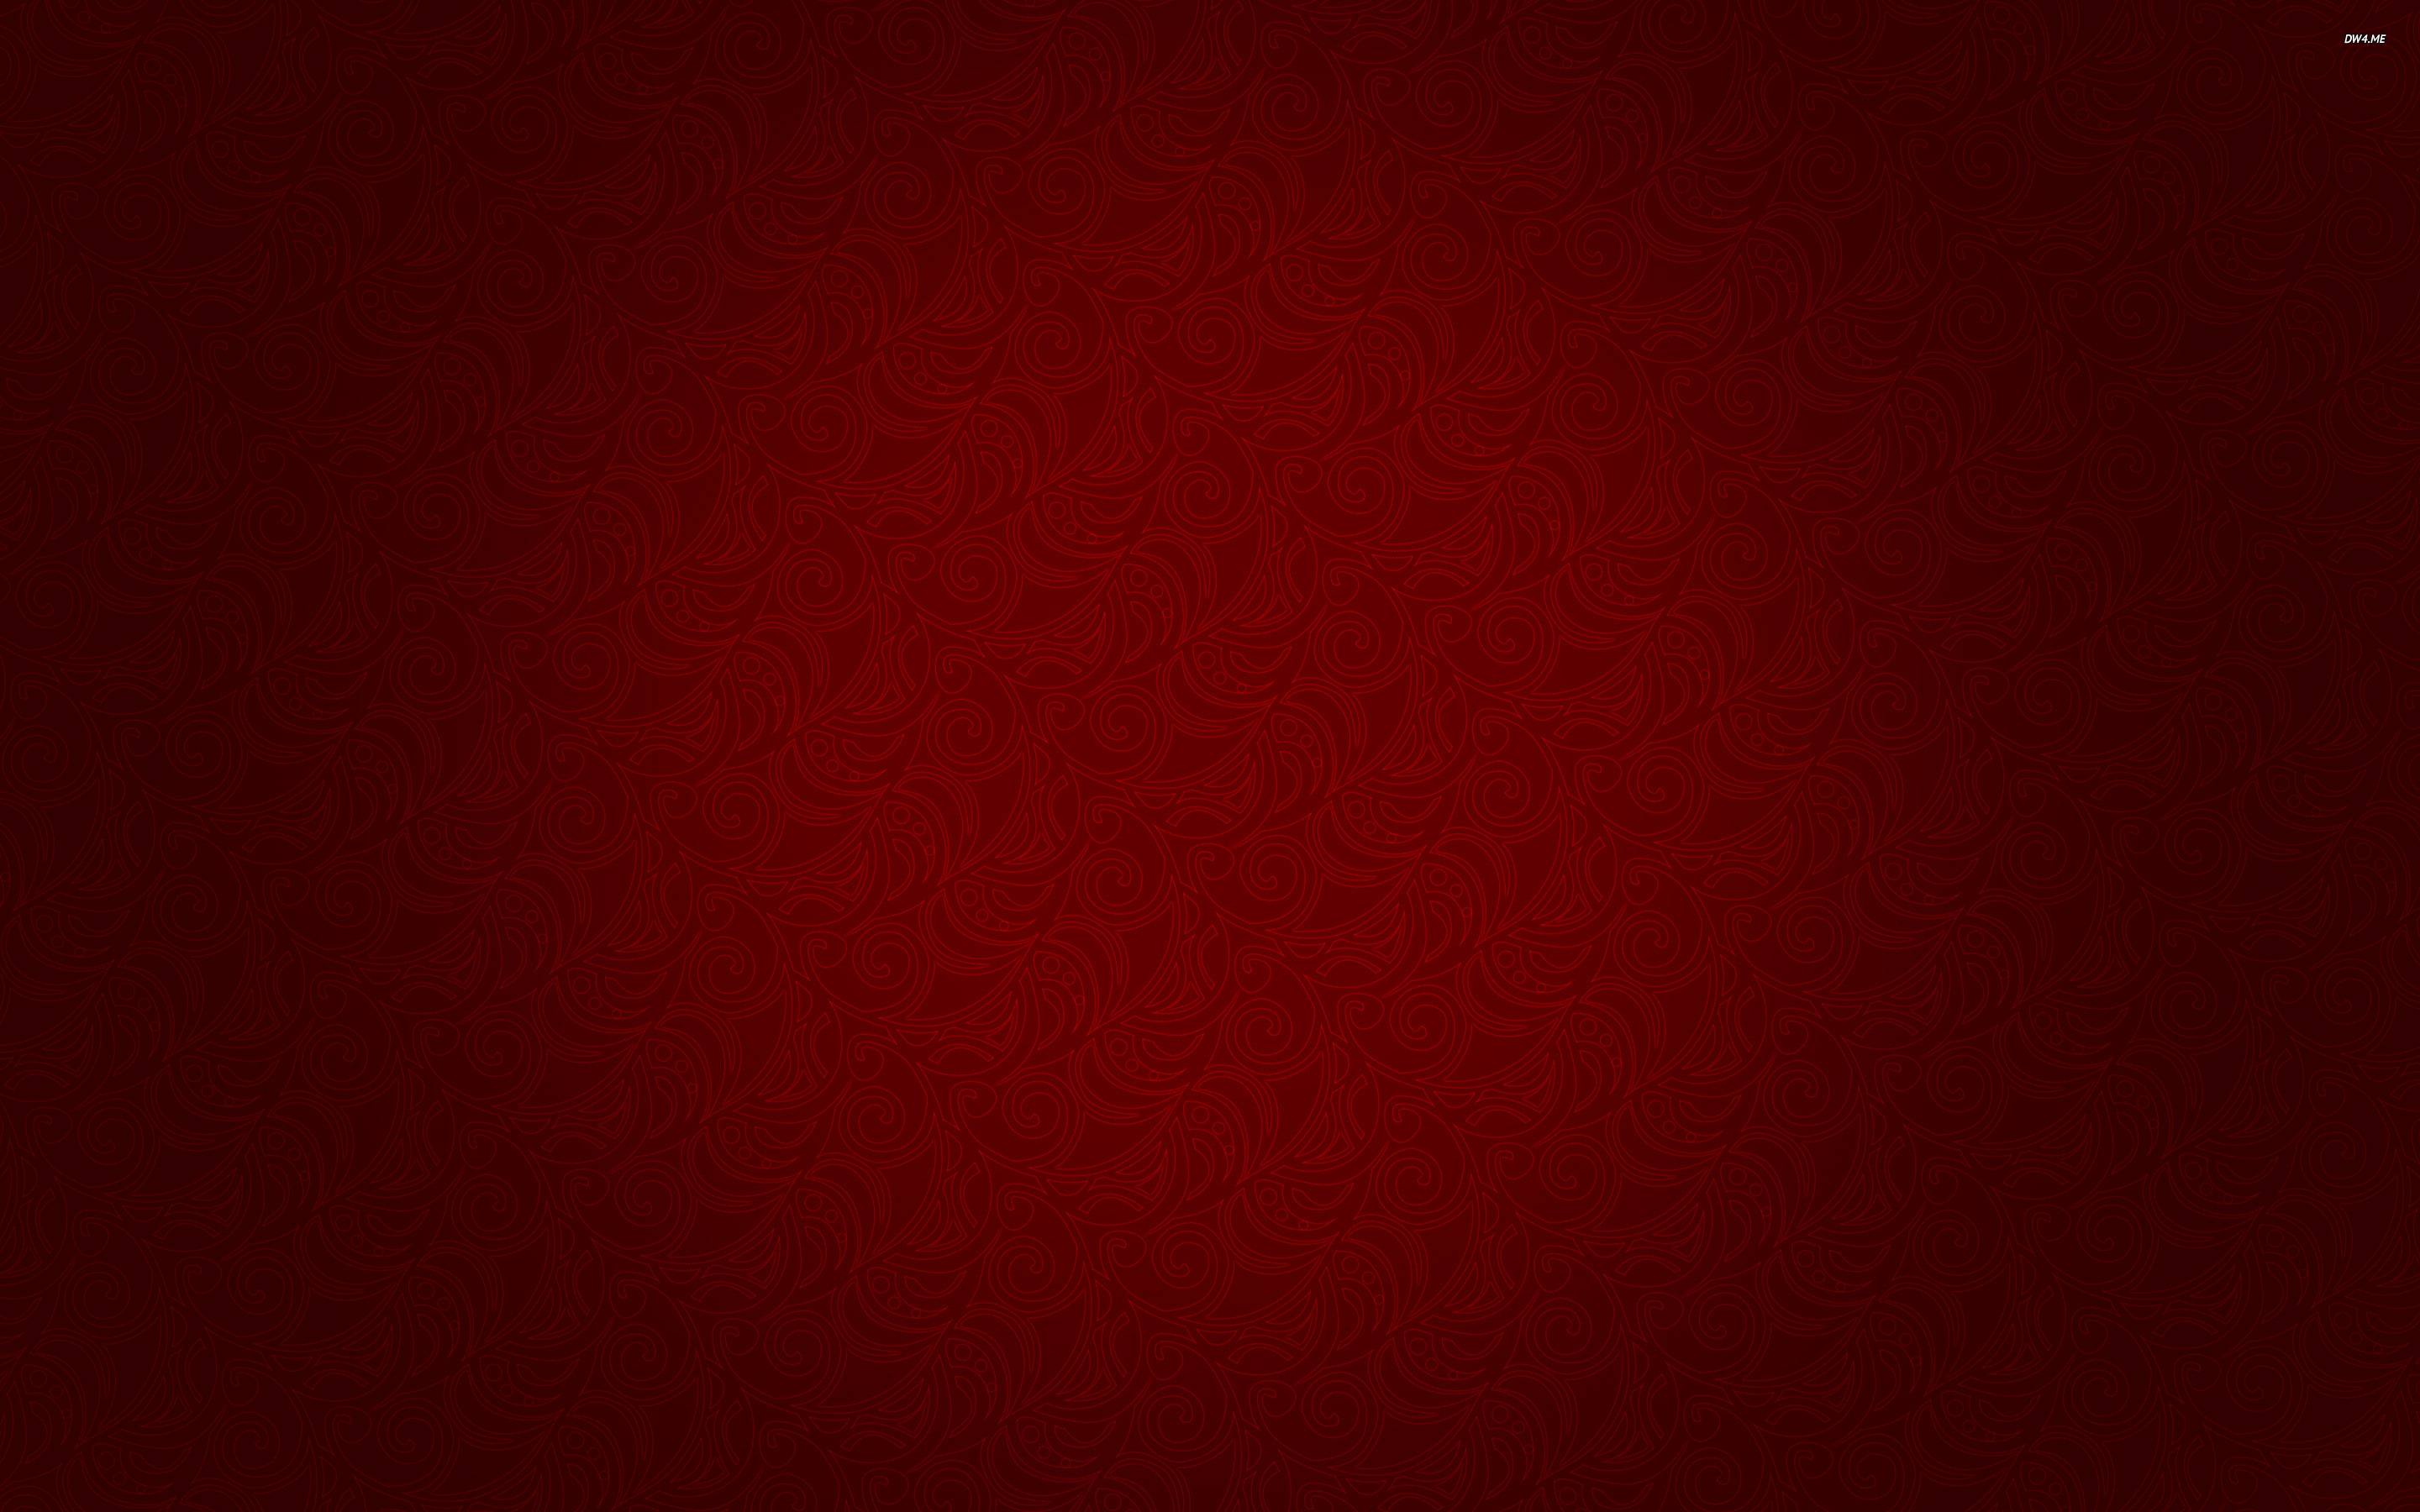 1212 Red Swirl Pattern 2880x